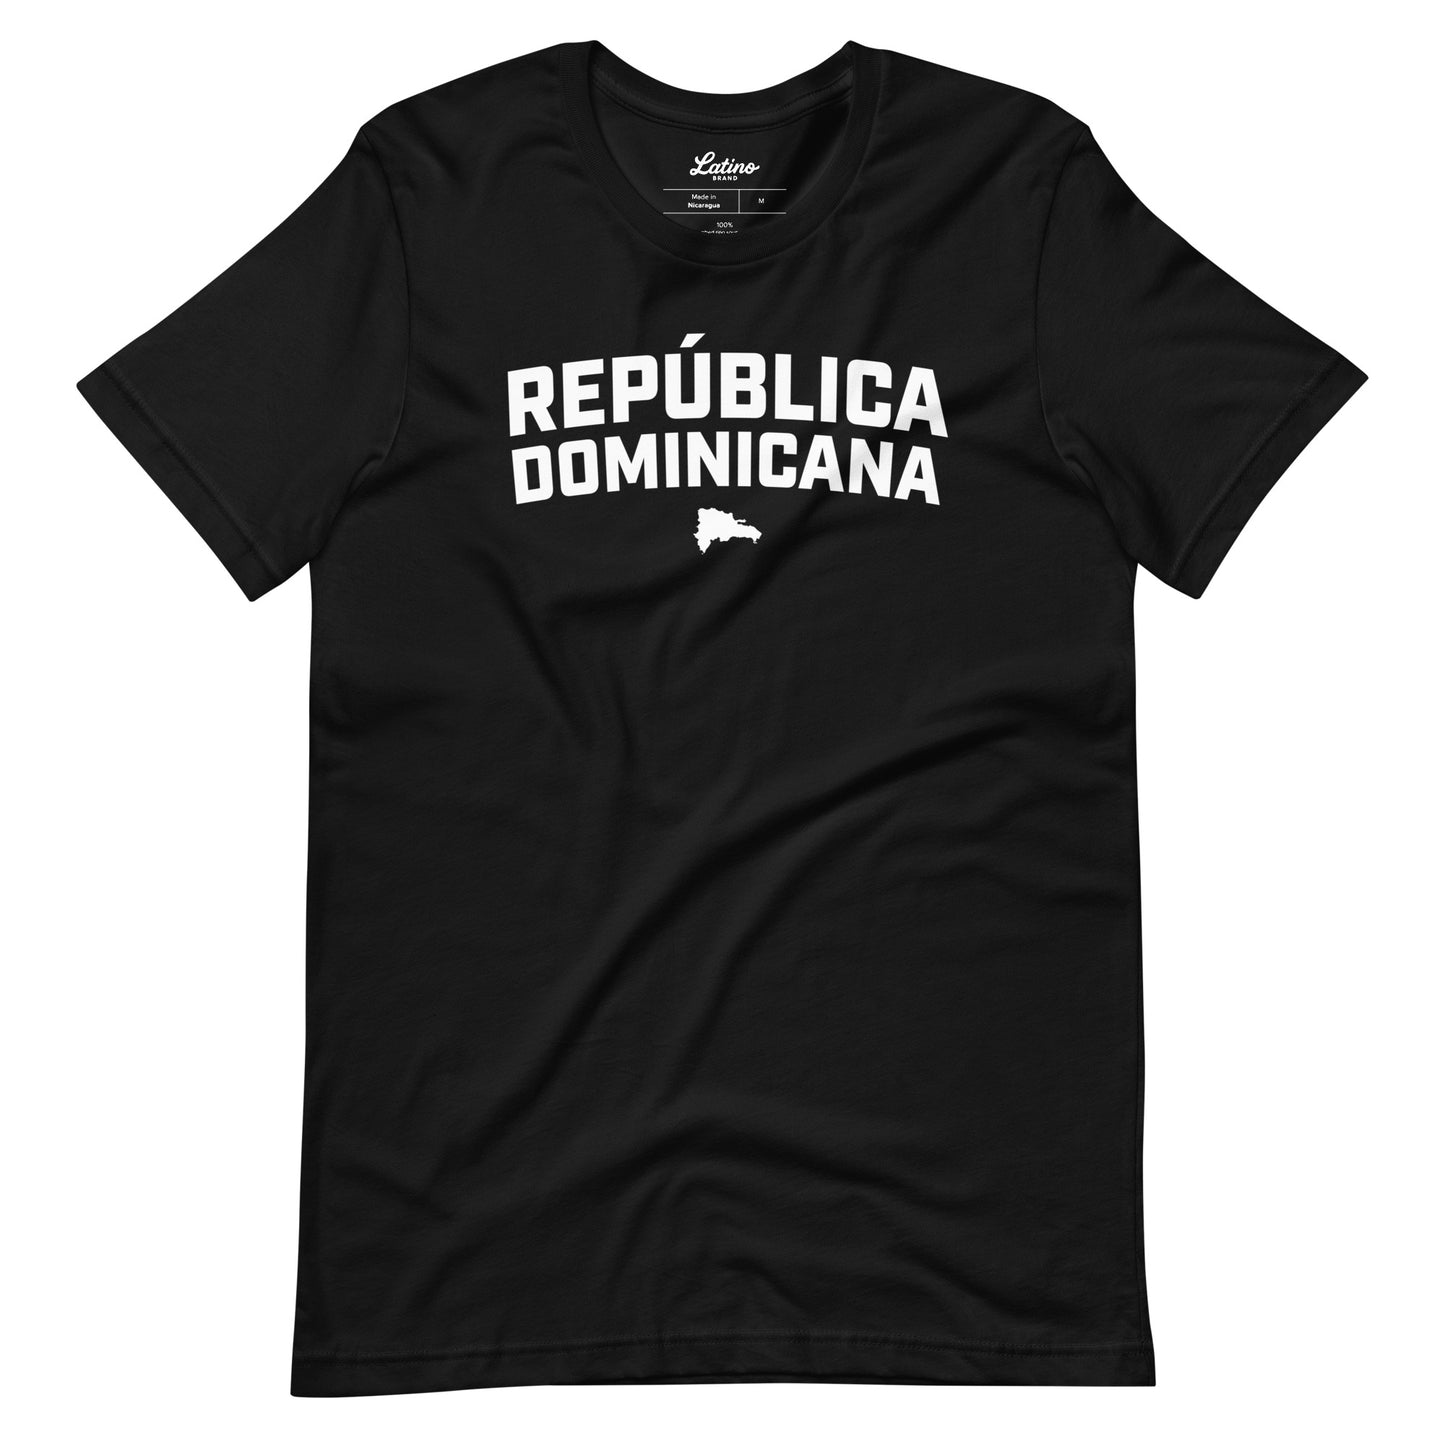 🇩🇴 Republica Dominicana